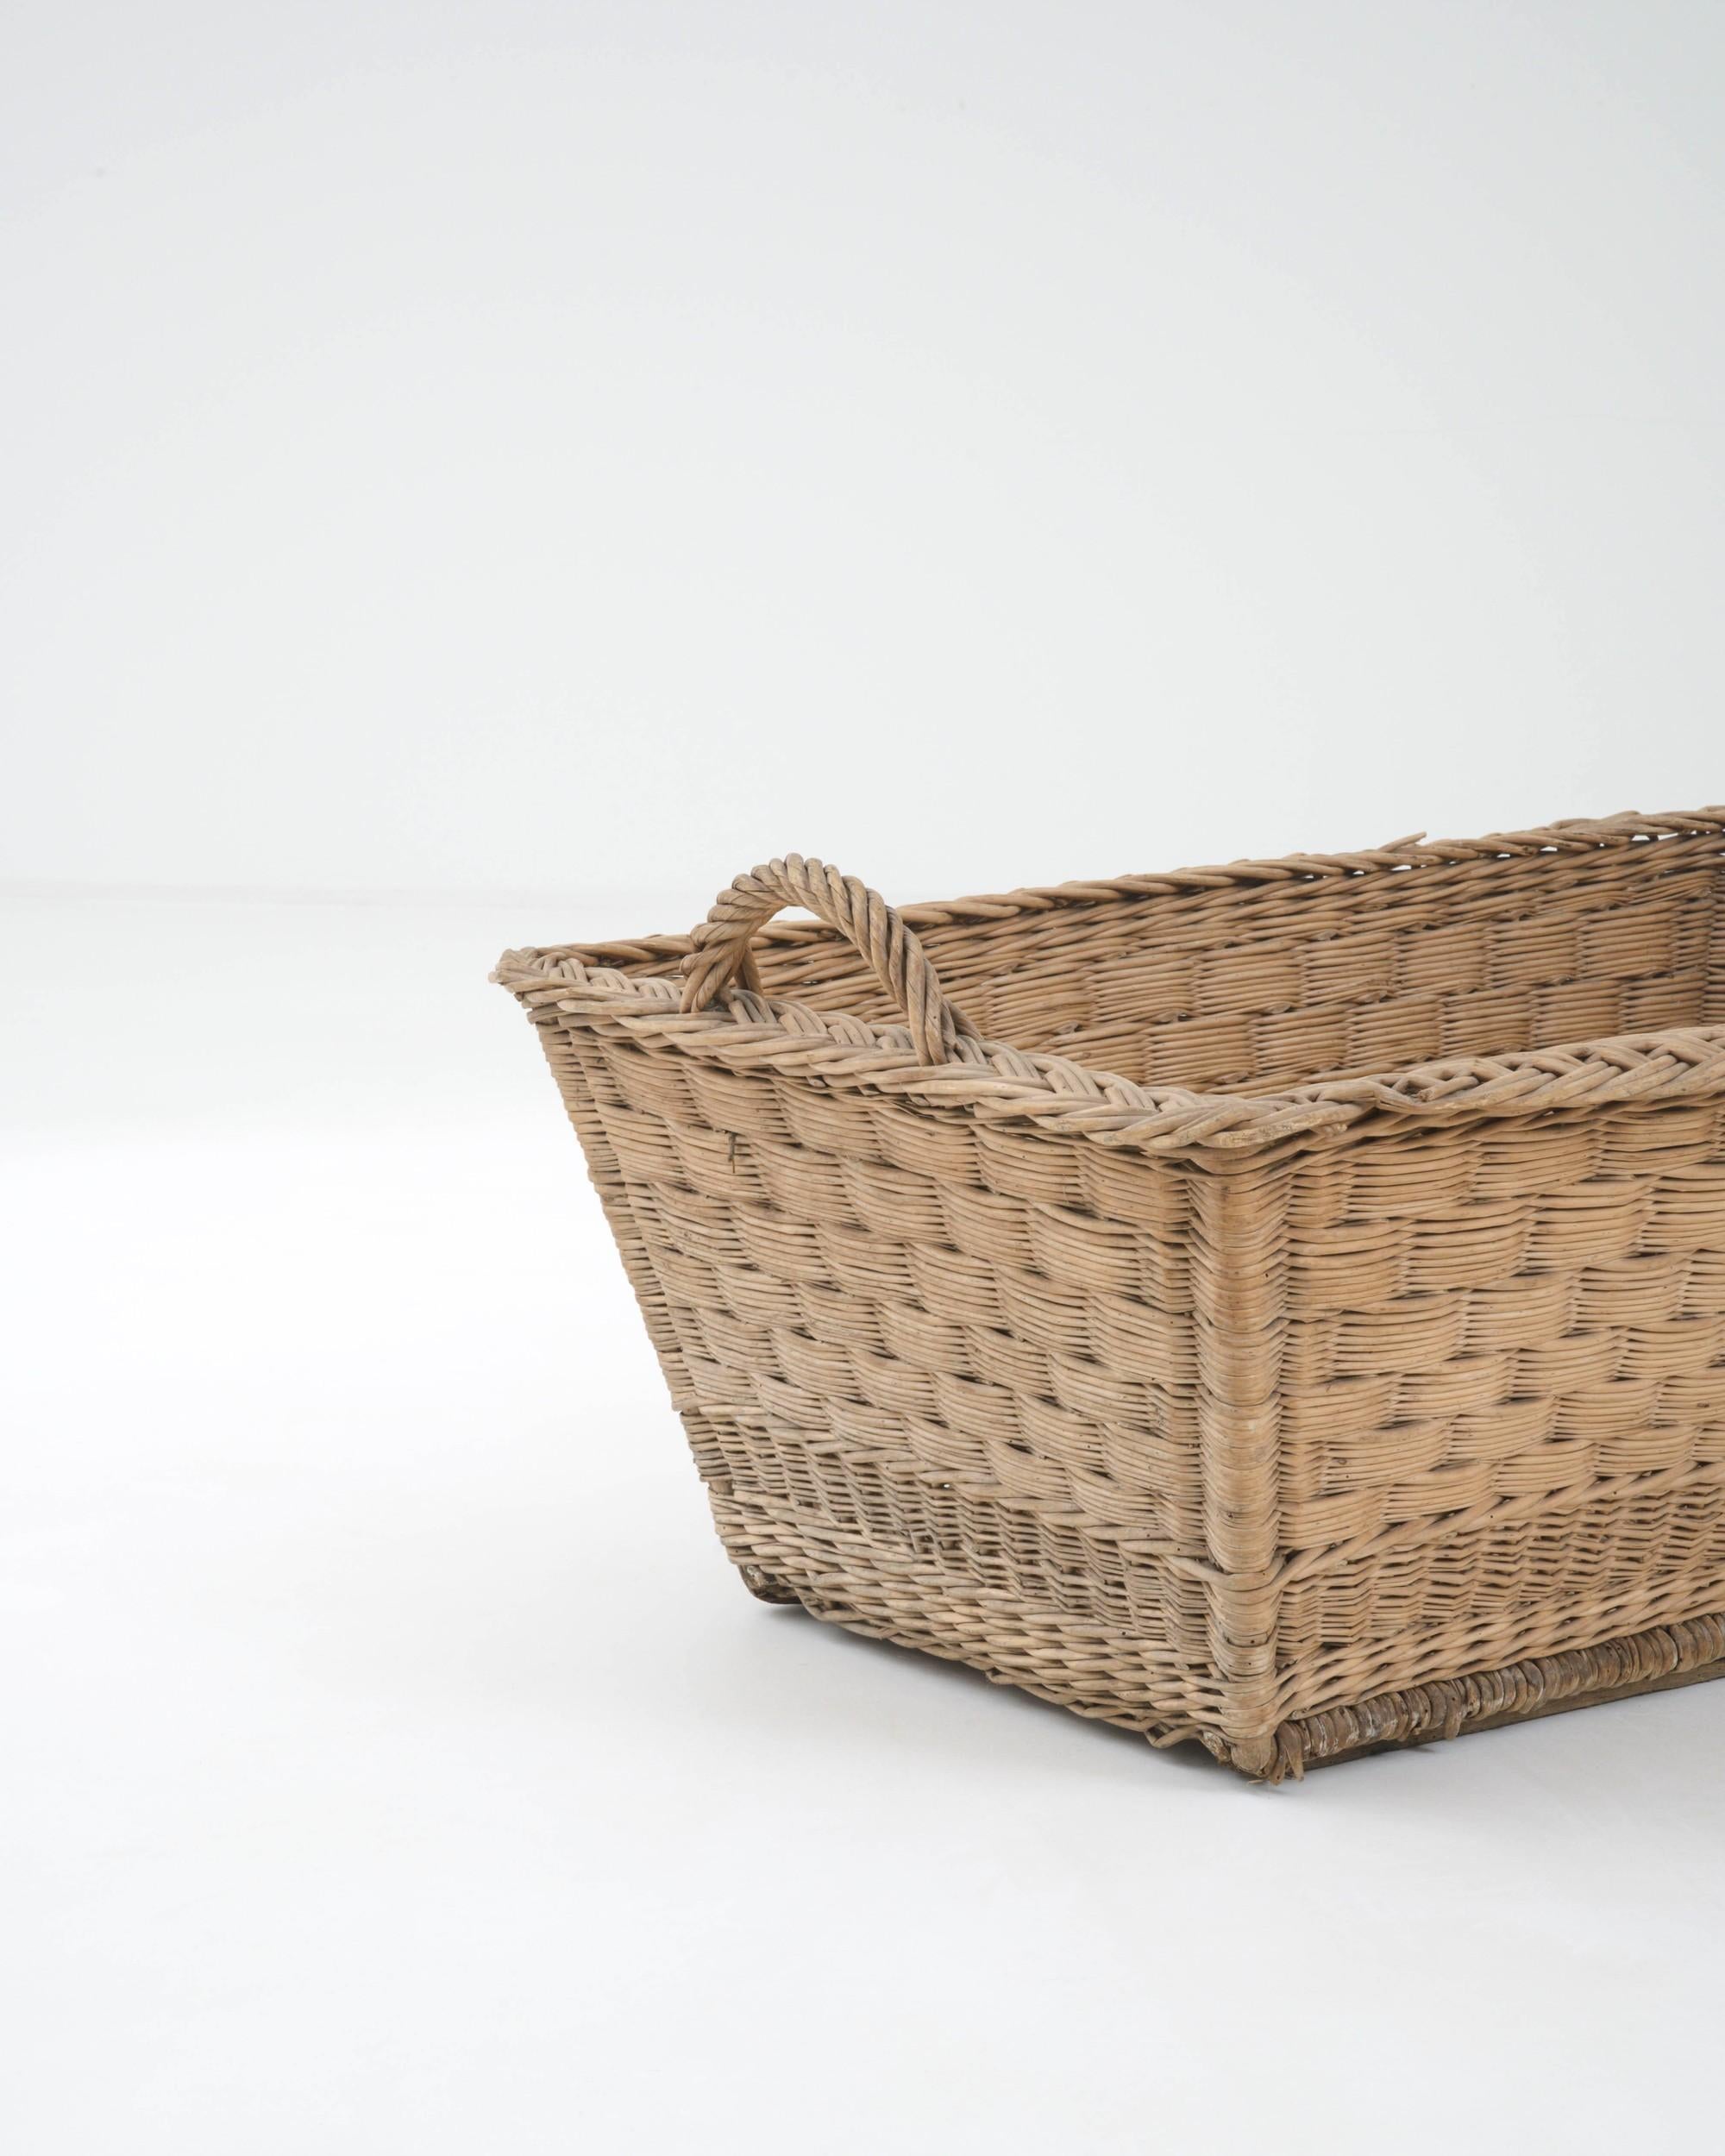 Wicker Vintage French Basket